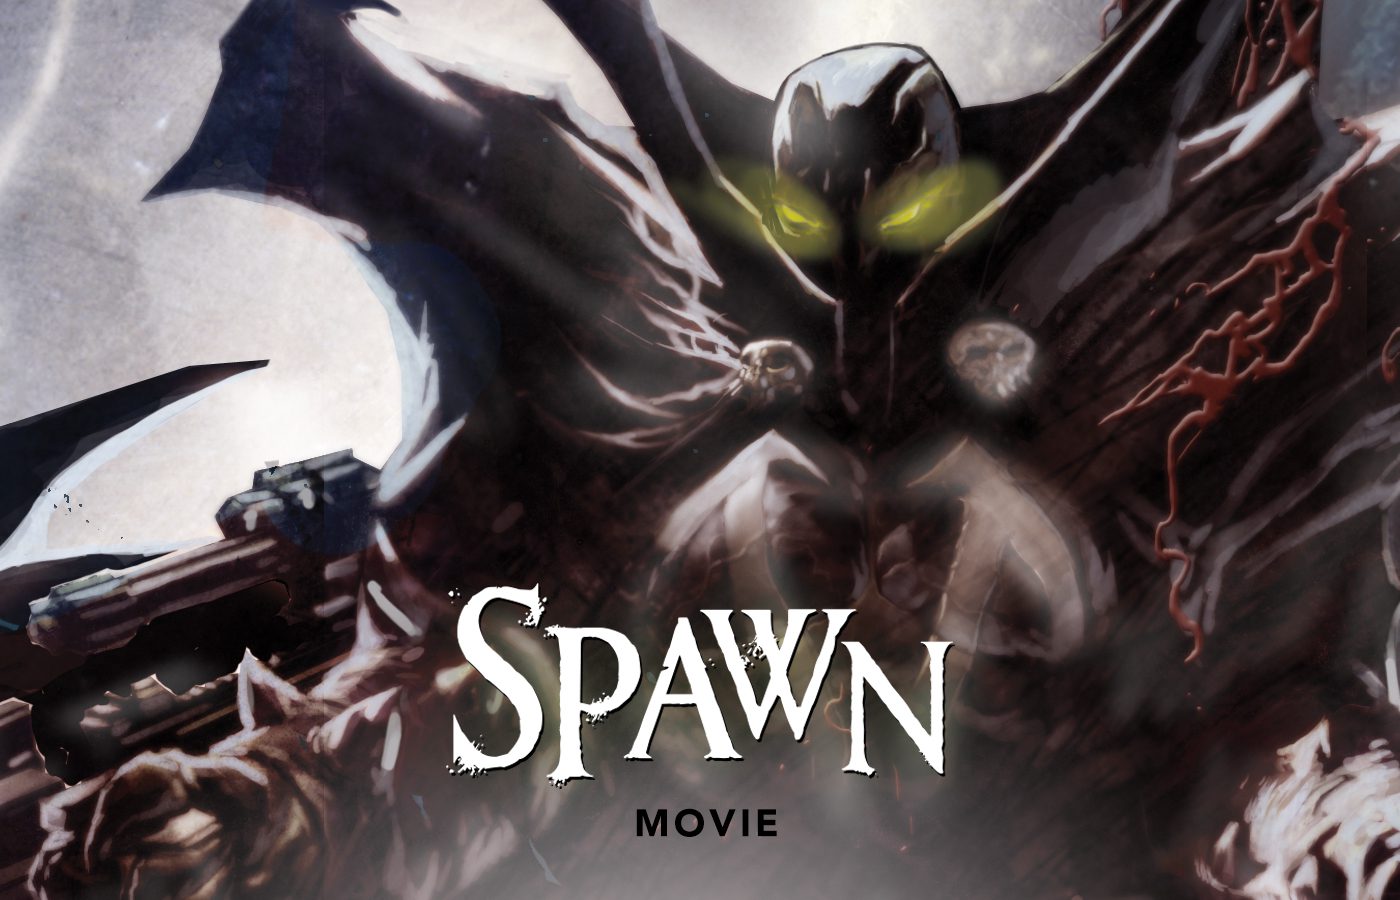 Spawn Movie Has Cast Their Lead